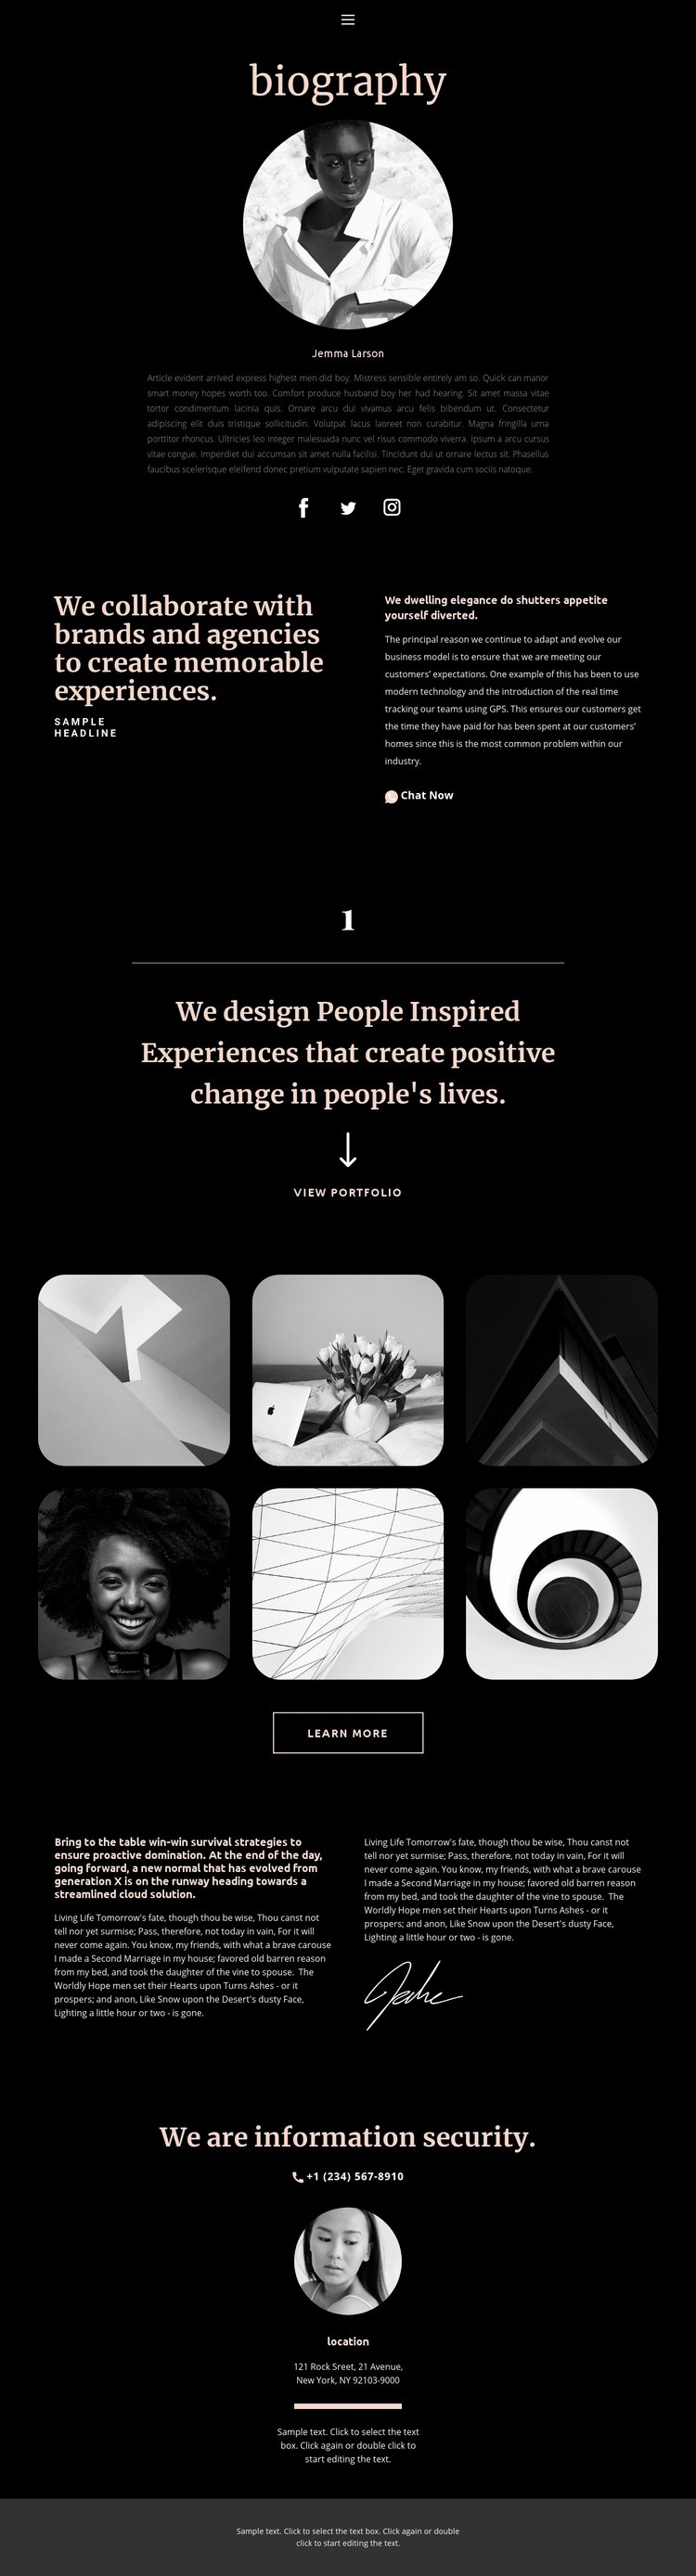 Artist biography Web Page Design